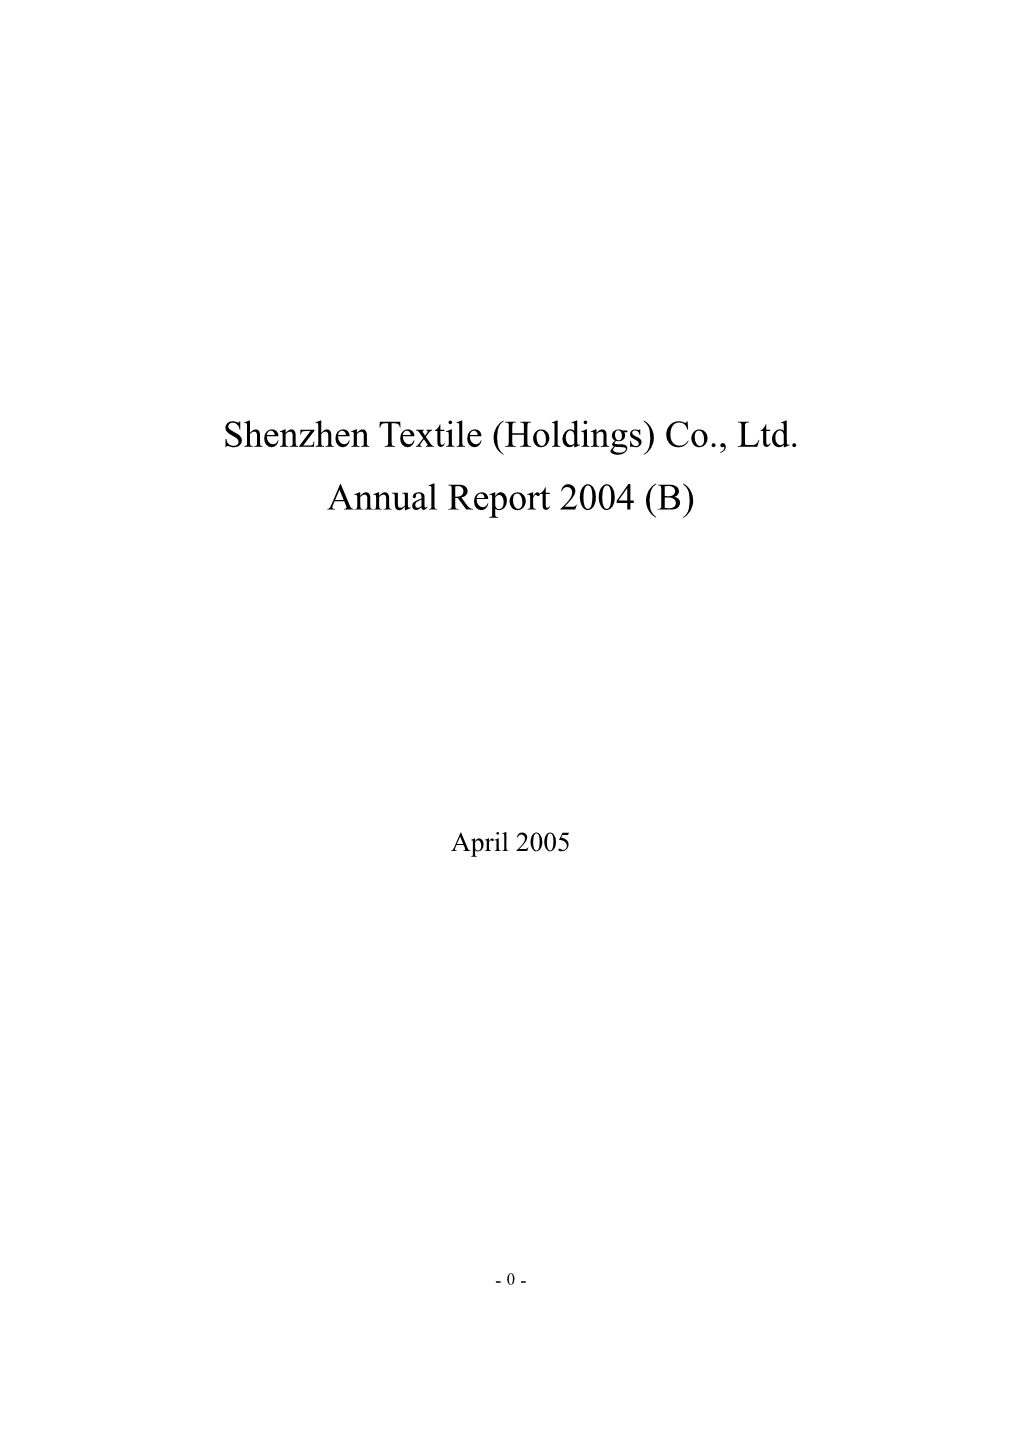 Shenzhen Textile (Holdings) Co., Ltd. Annual Report 2004 (B)